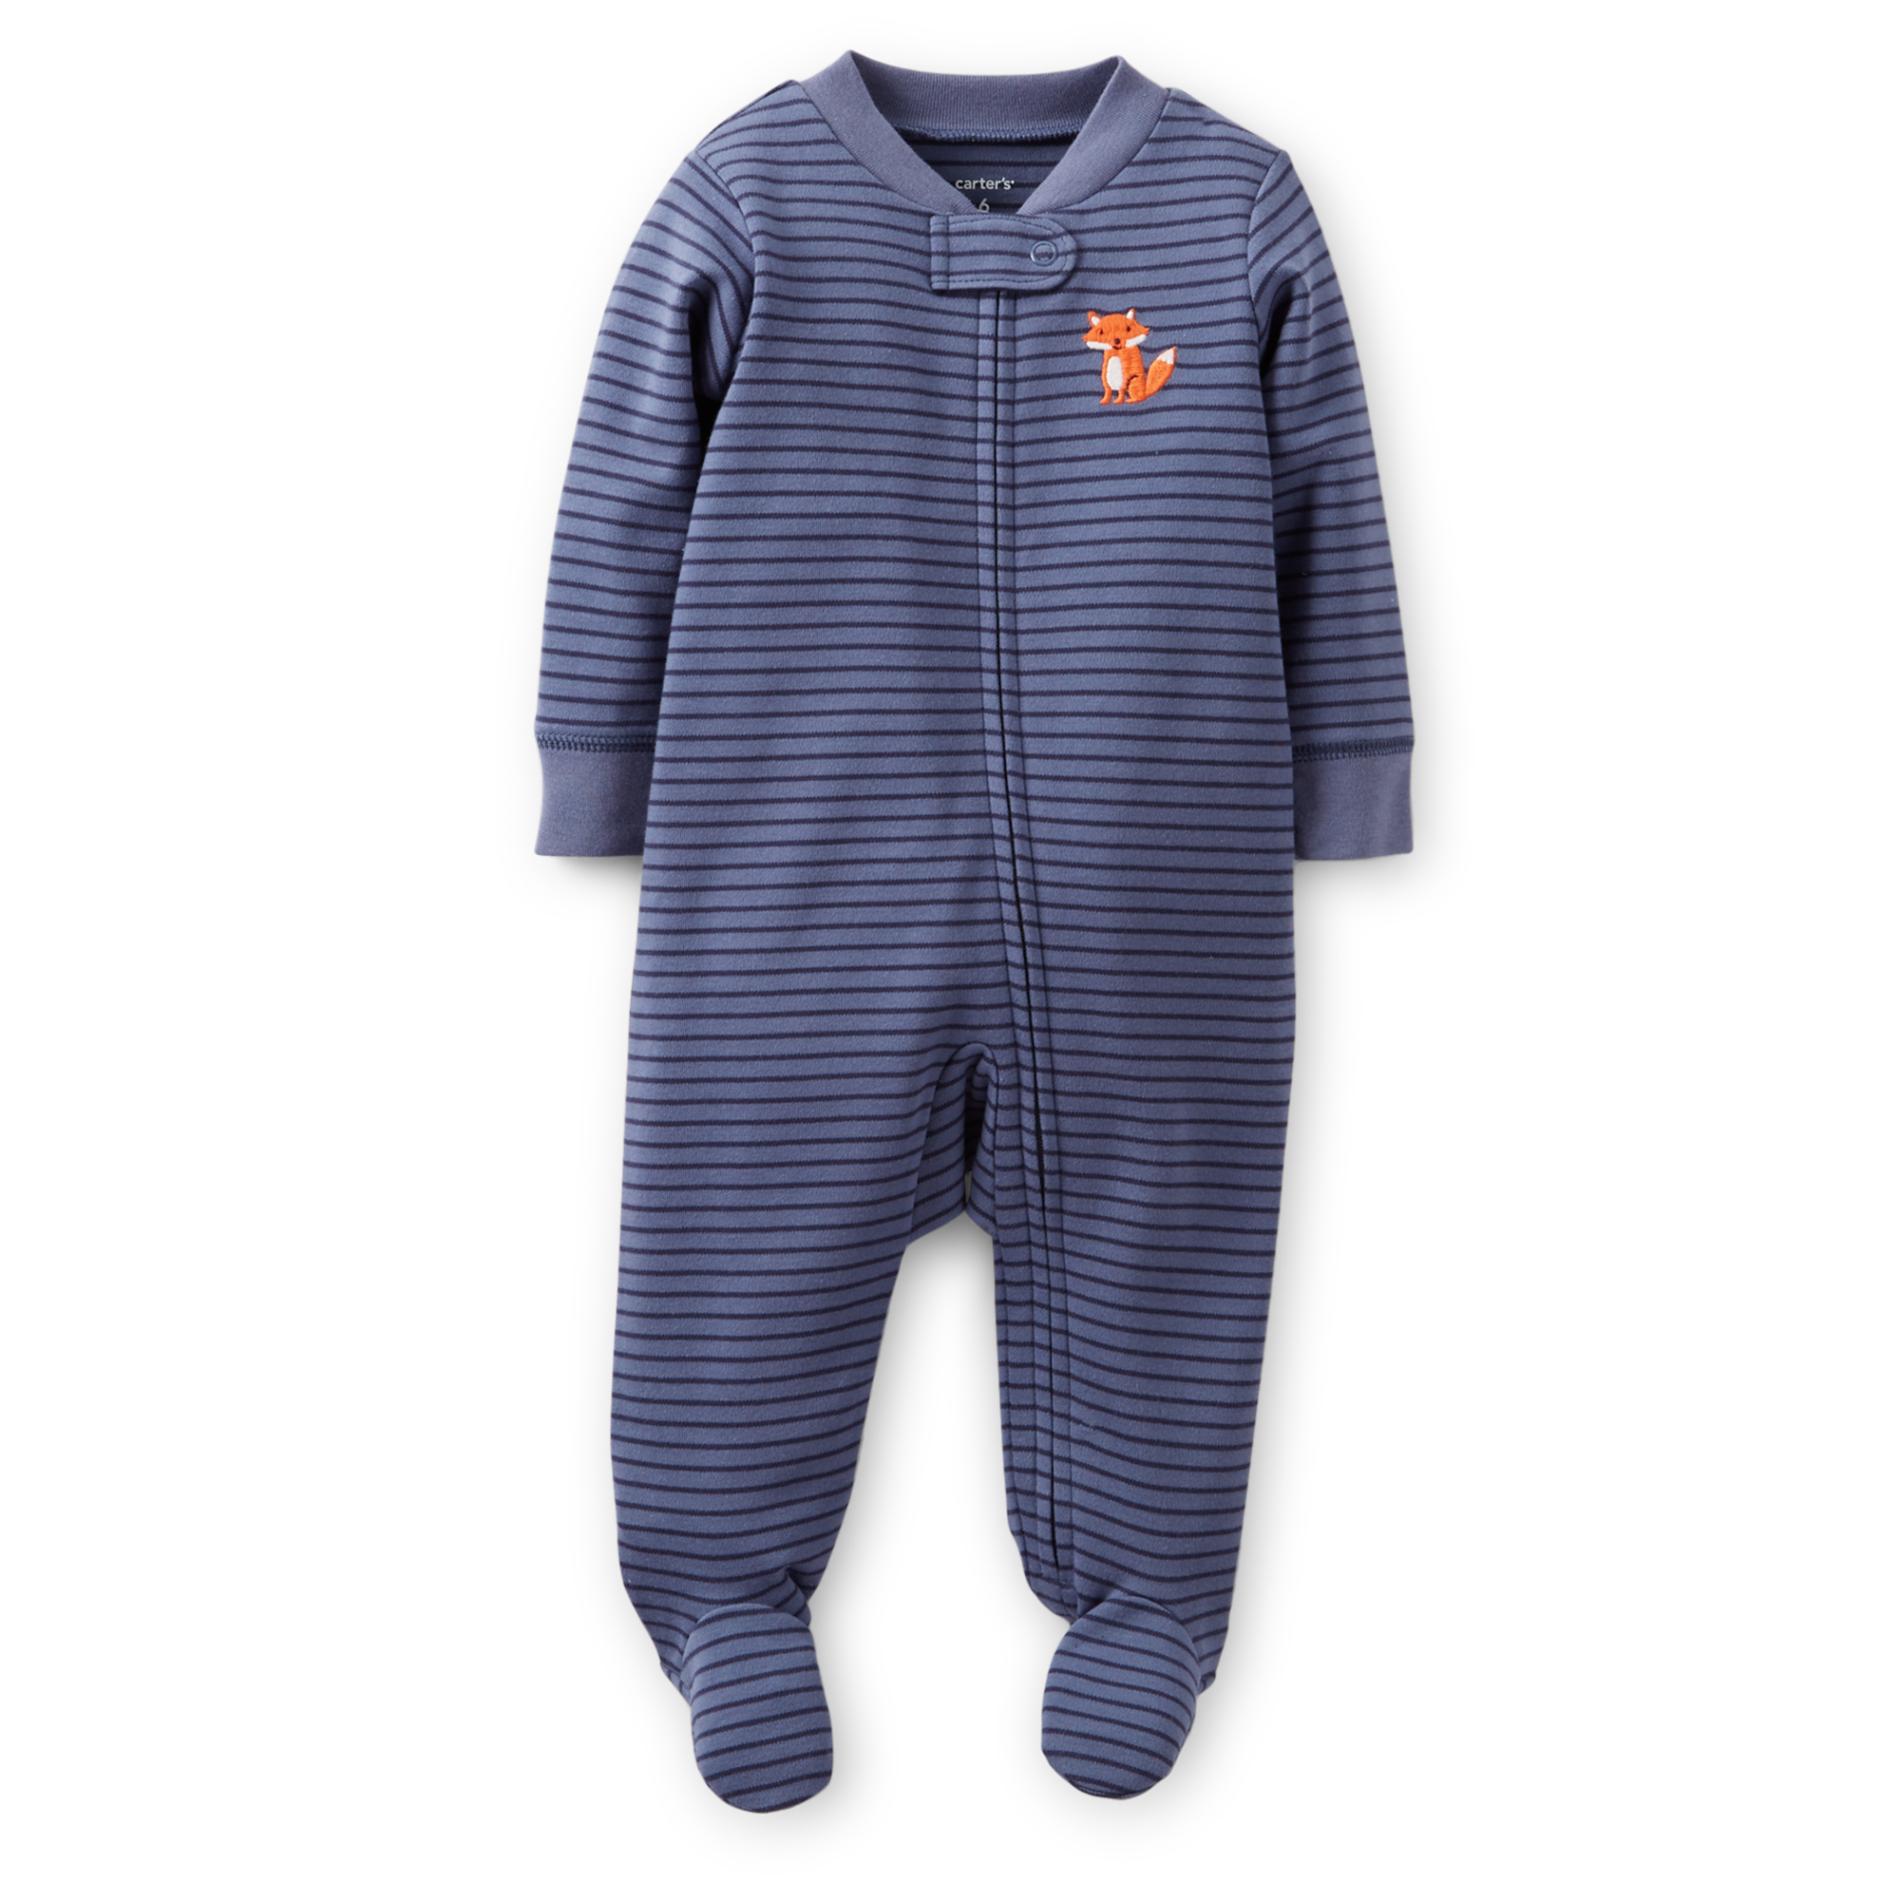 Carter's Newborn Boy's Long-Sleeve Footed Pajamas - Striped